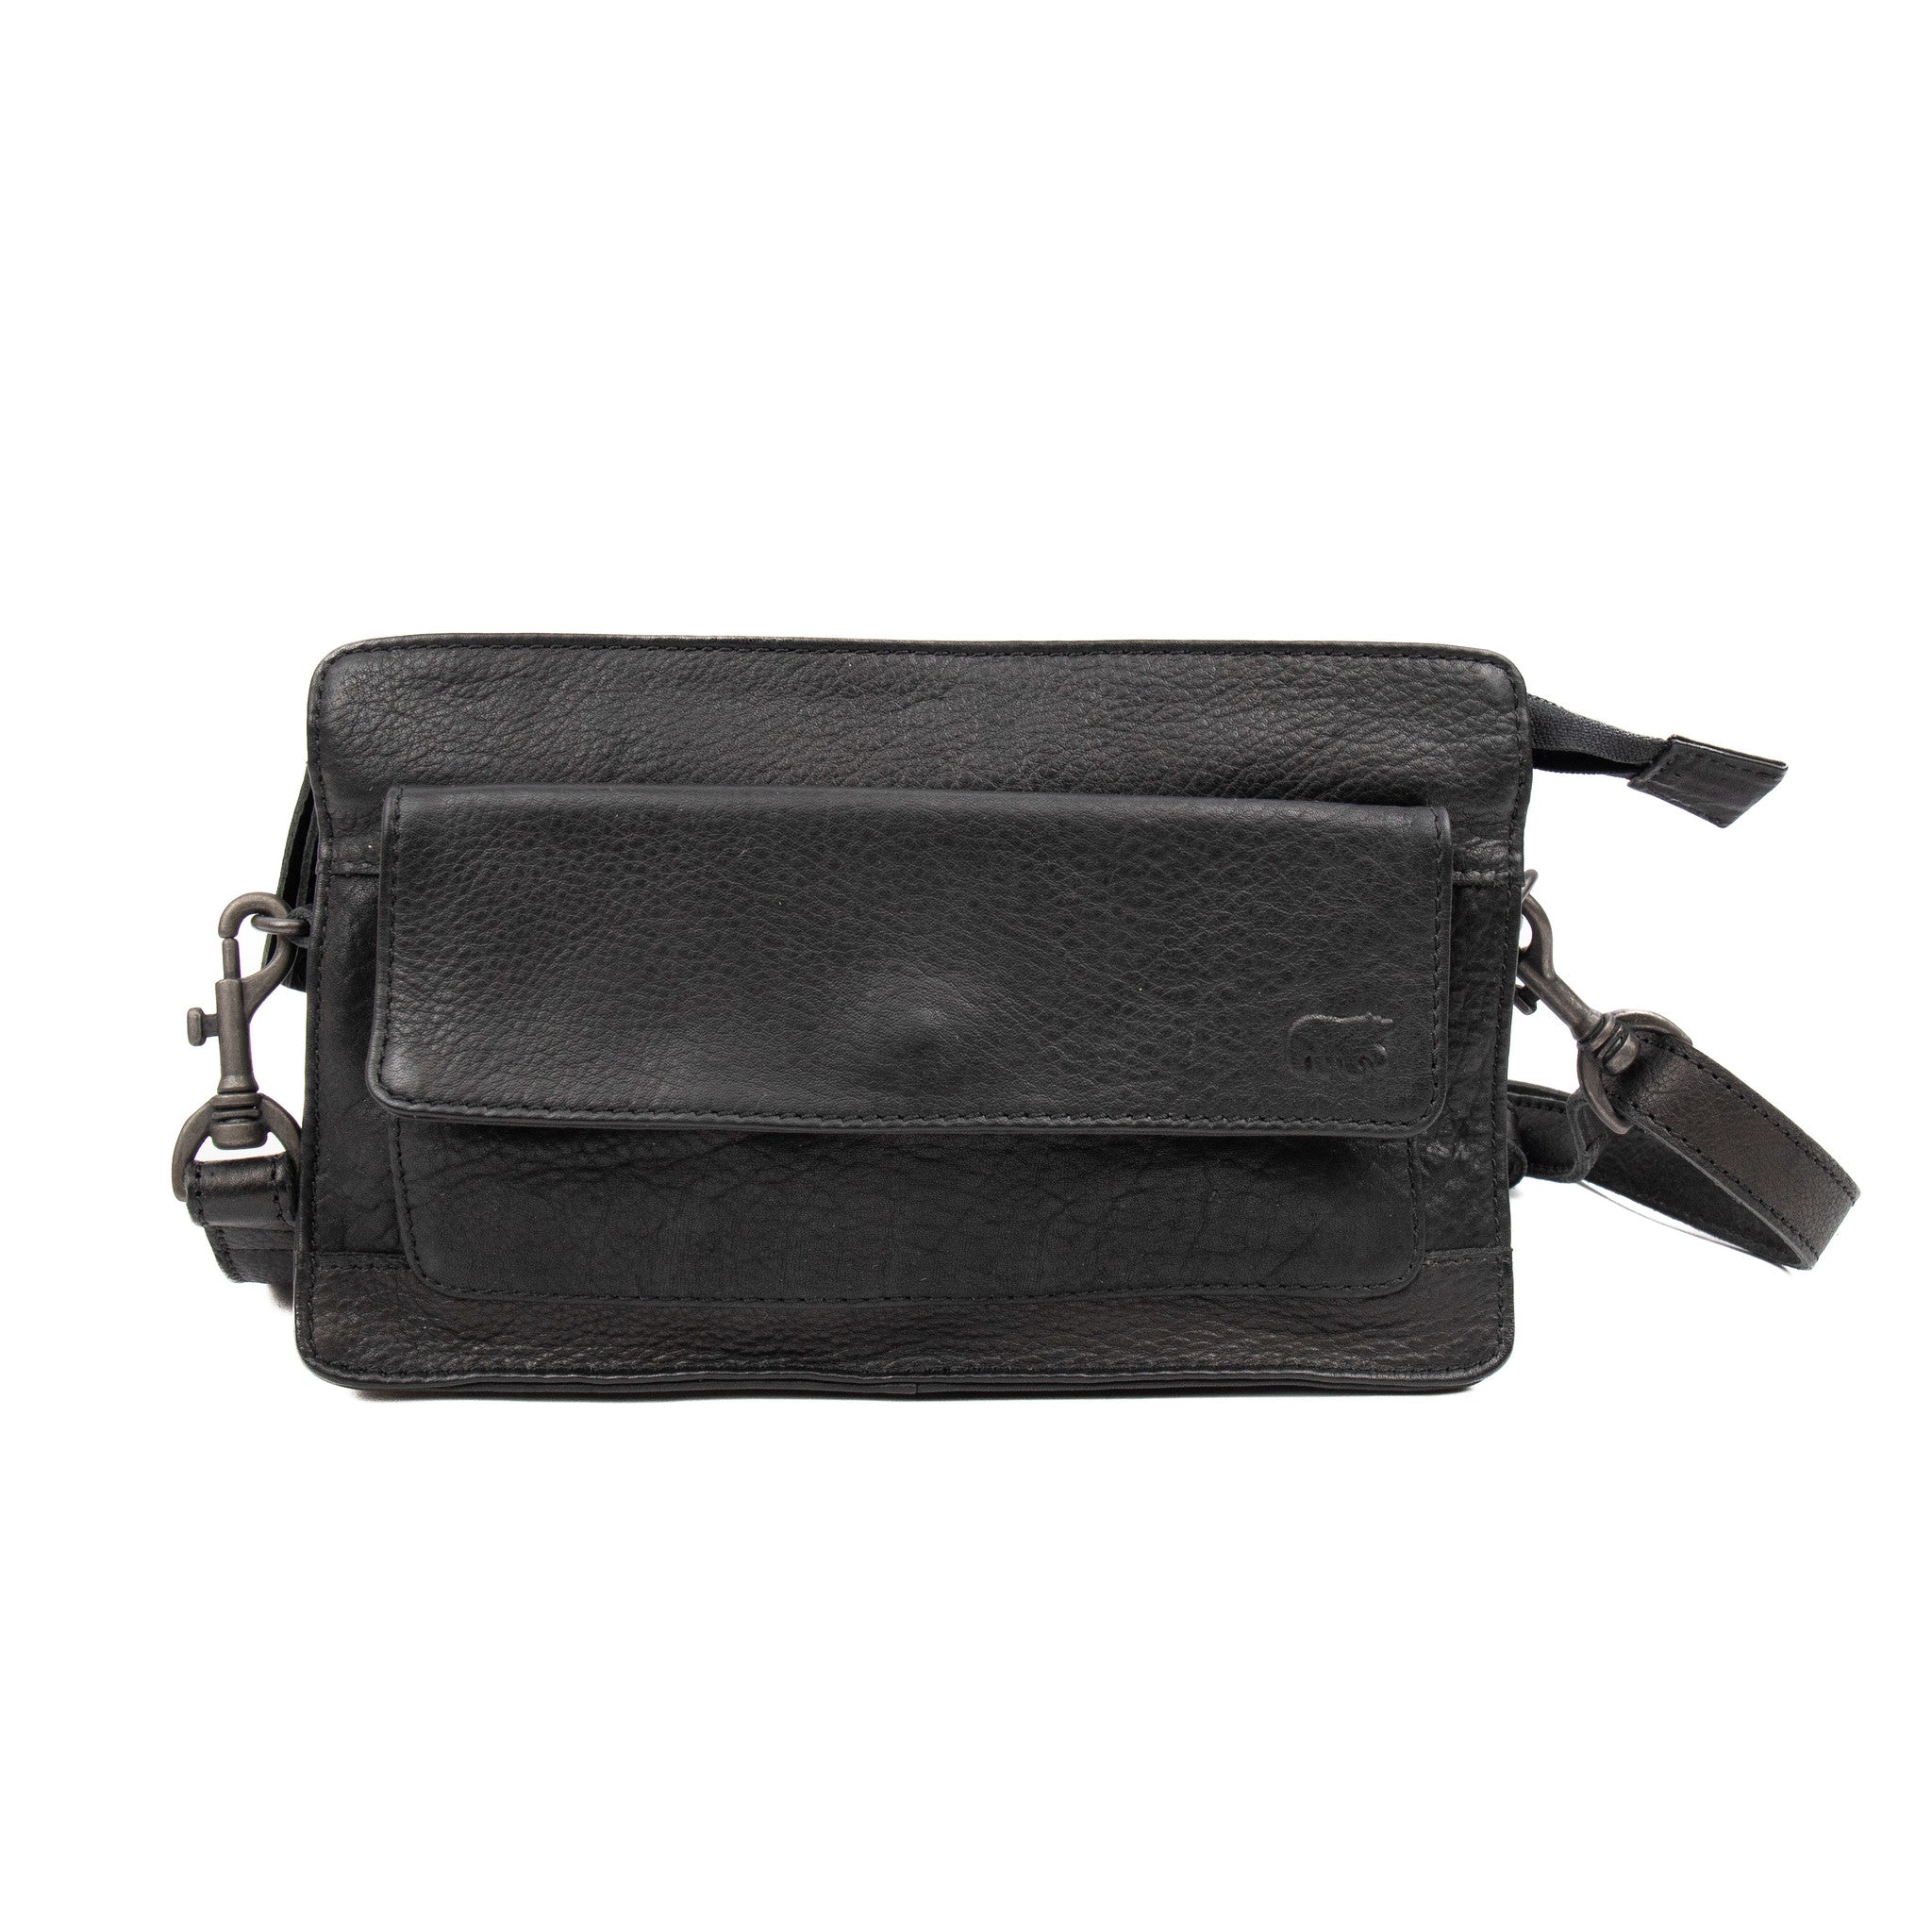 Shoulder bag 'Cil' black - CP 2339